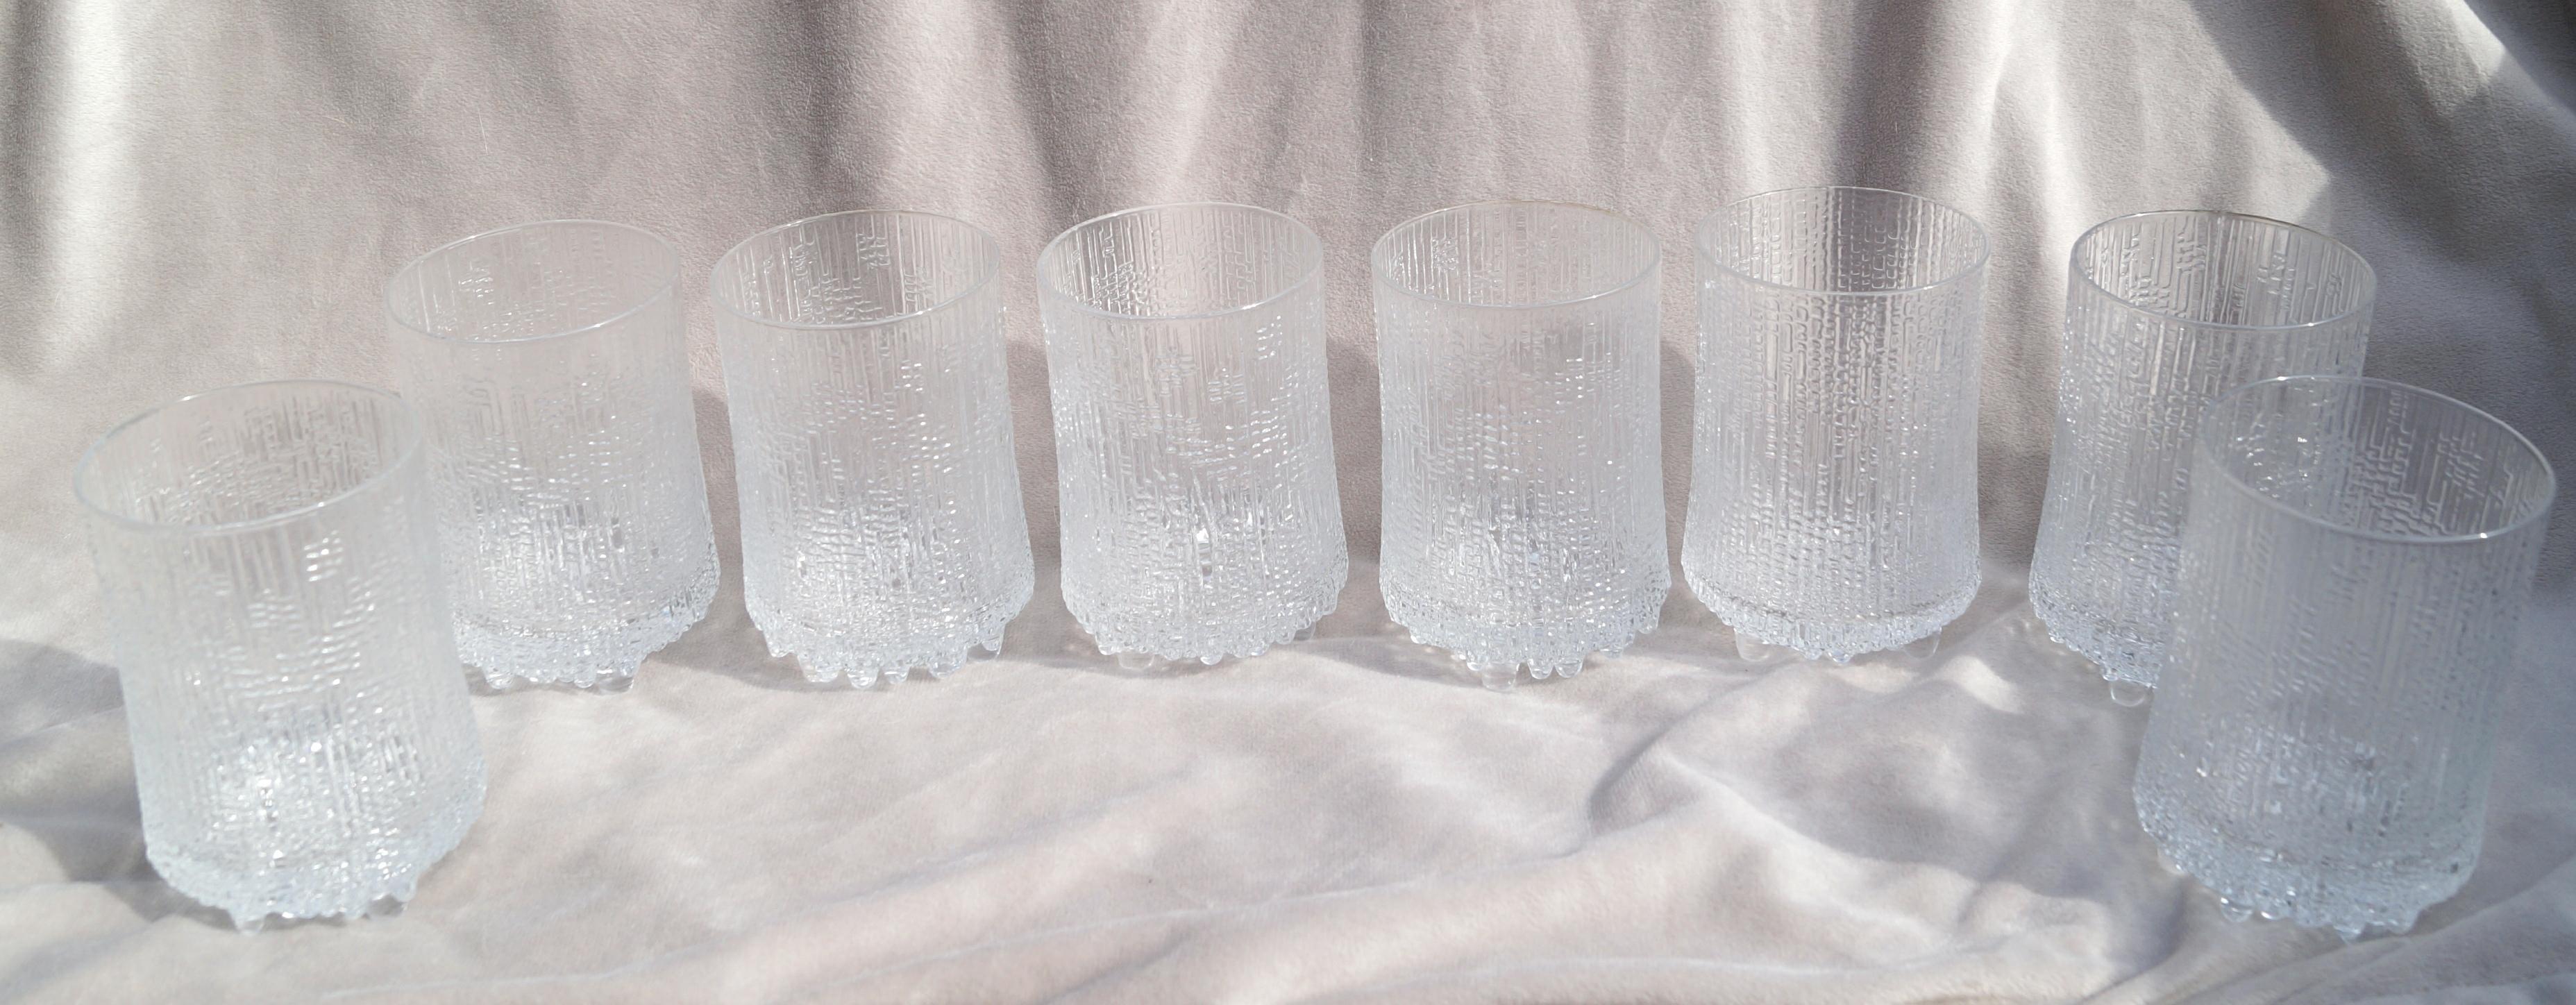 Mid-20th Century Set of 8 Tapio Wirkkala Ultima Thule Glass Highball Glasses Finland  3 Toed For Sale